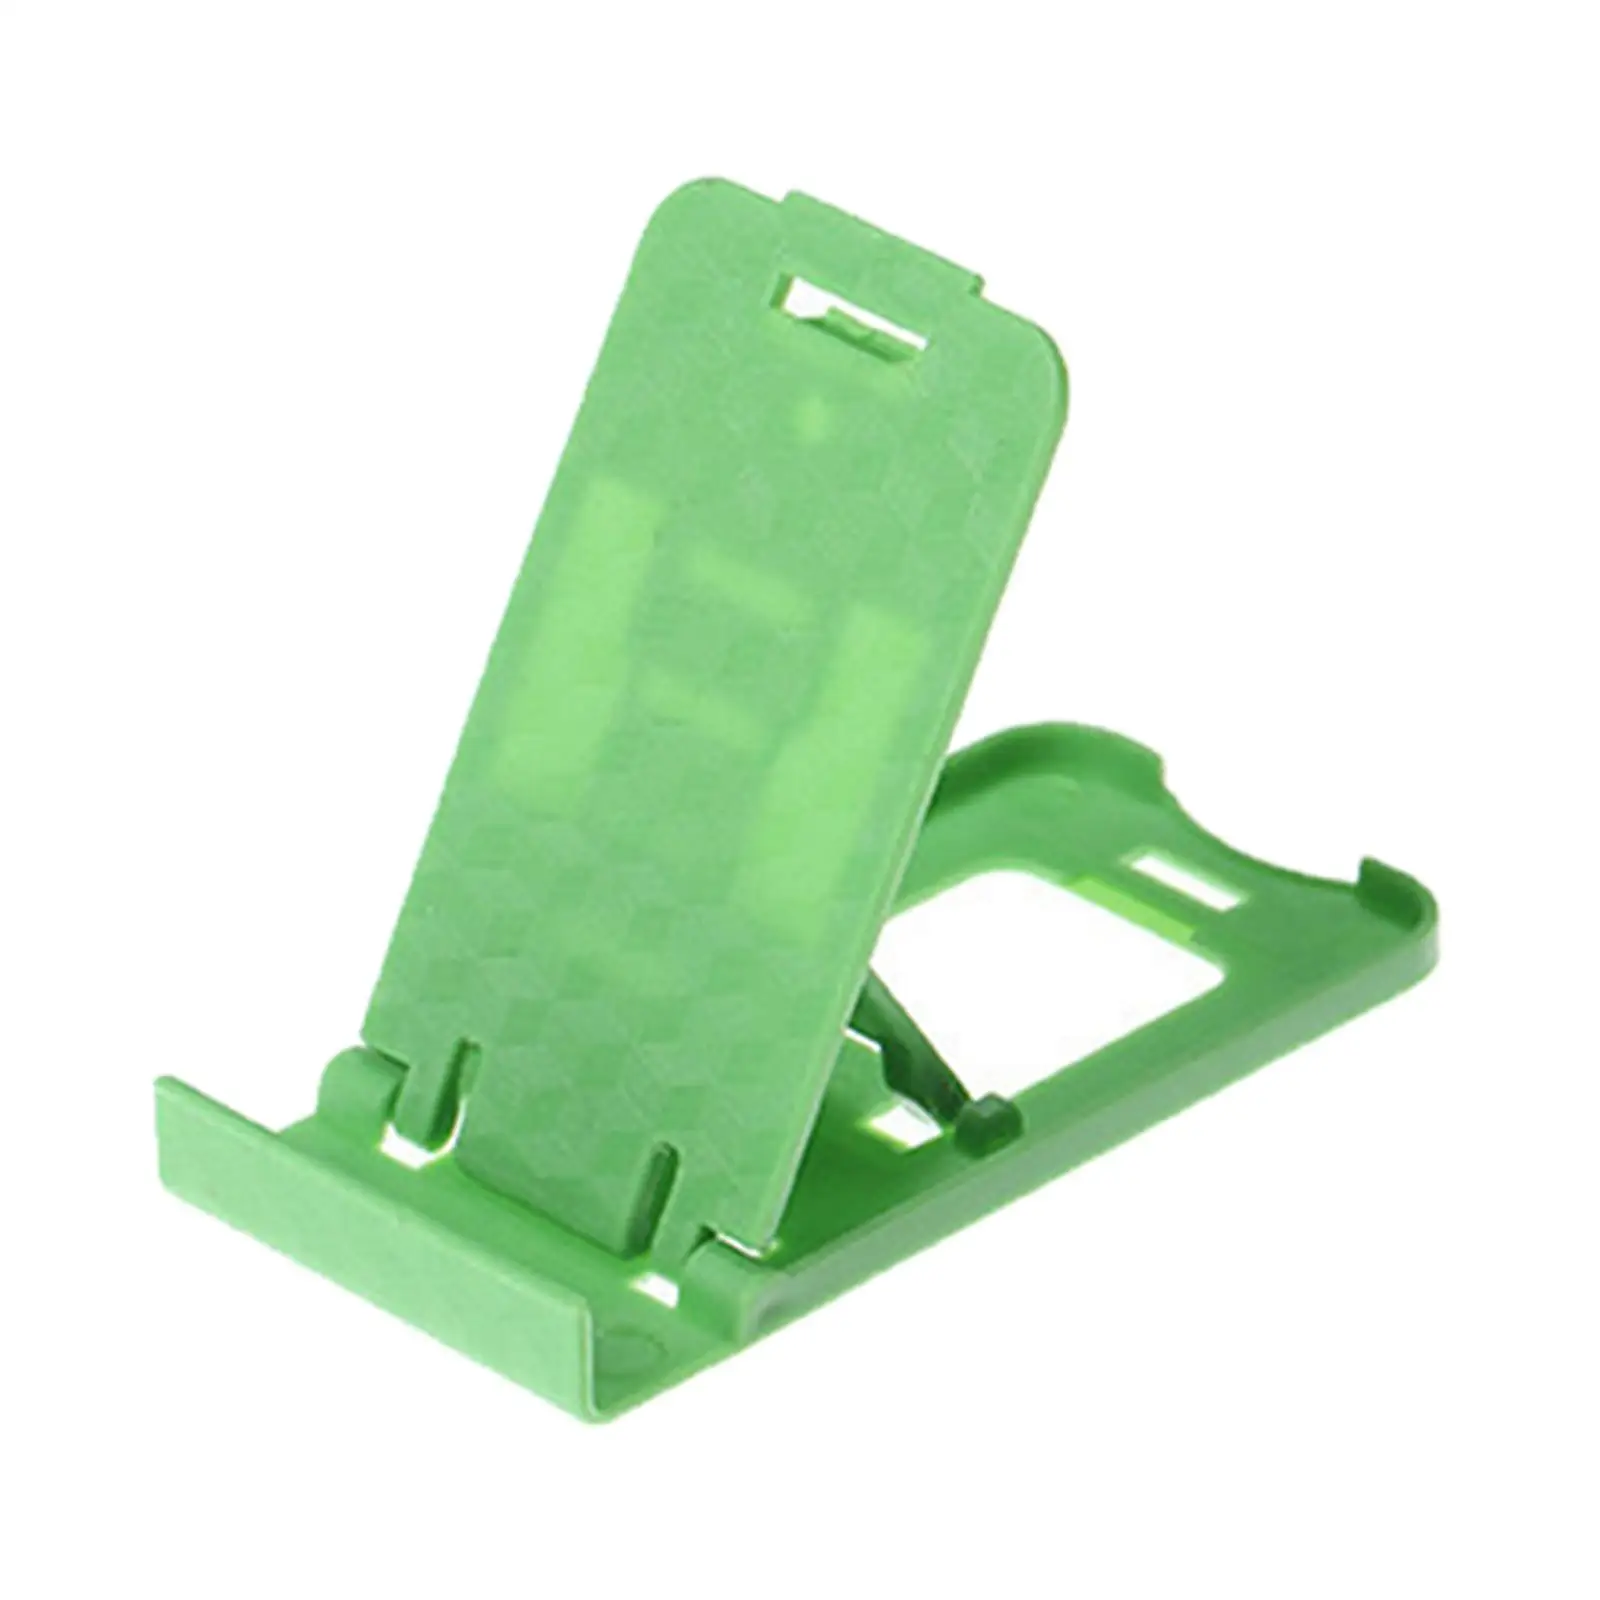 Mini Chair Shape Cell Phone Stand Multi Angle Cradle Universal Adjustable Mobile Phone Holder for Desktop Smartphones Tablet